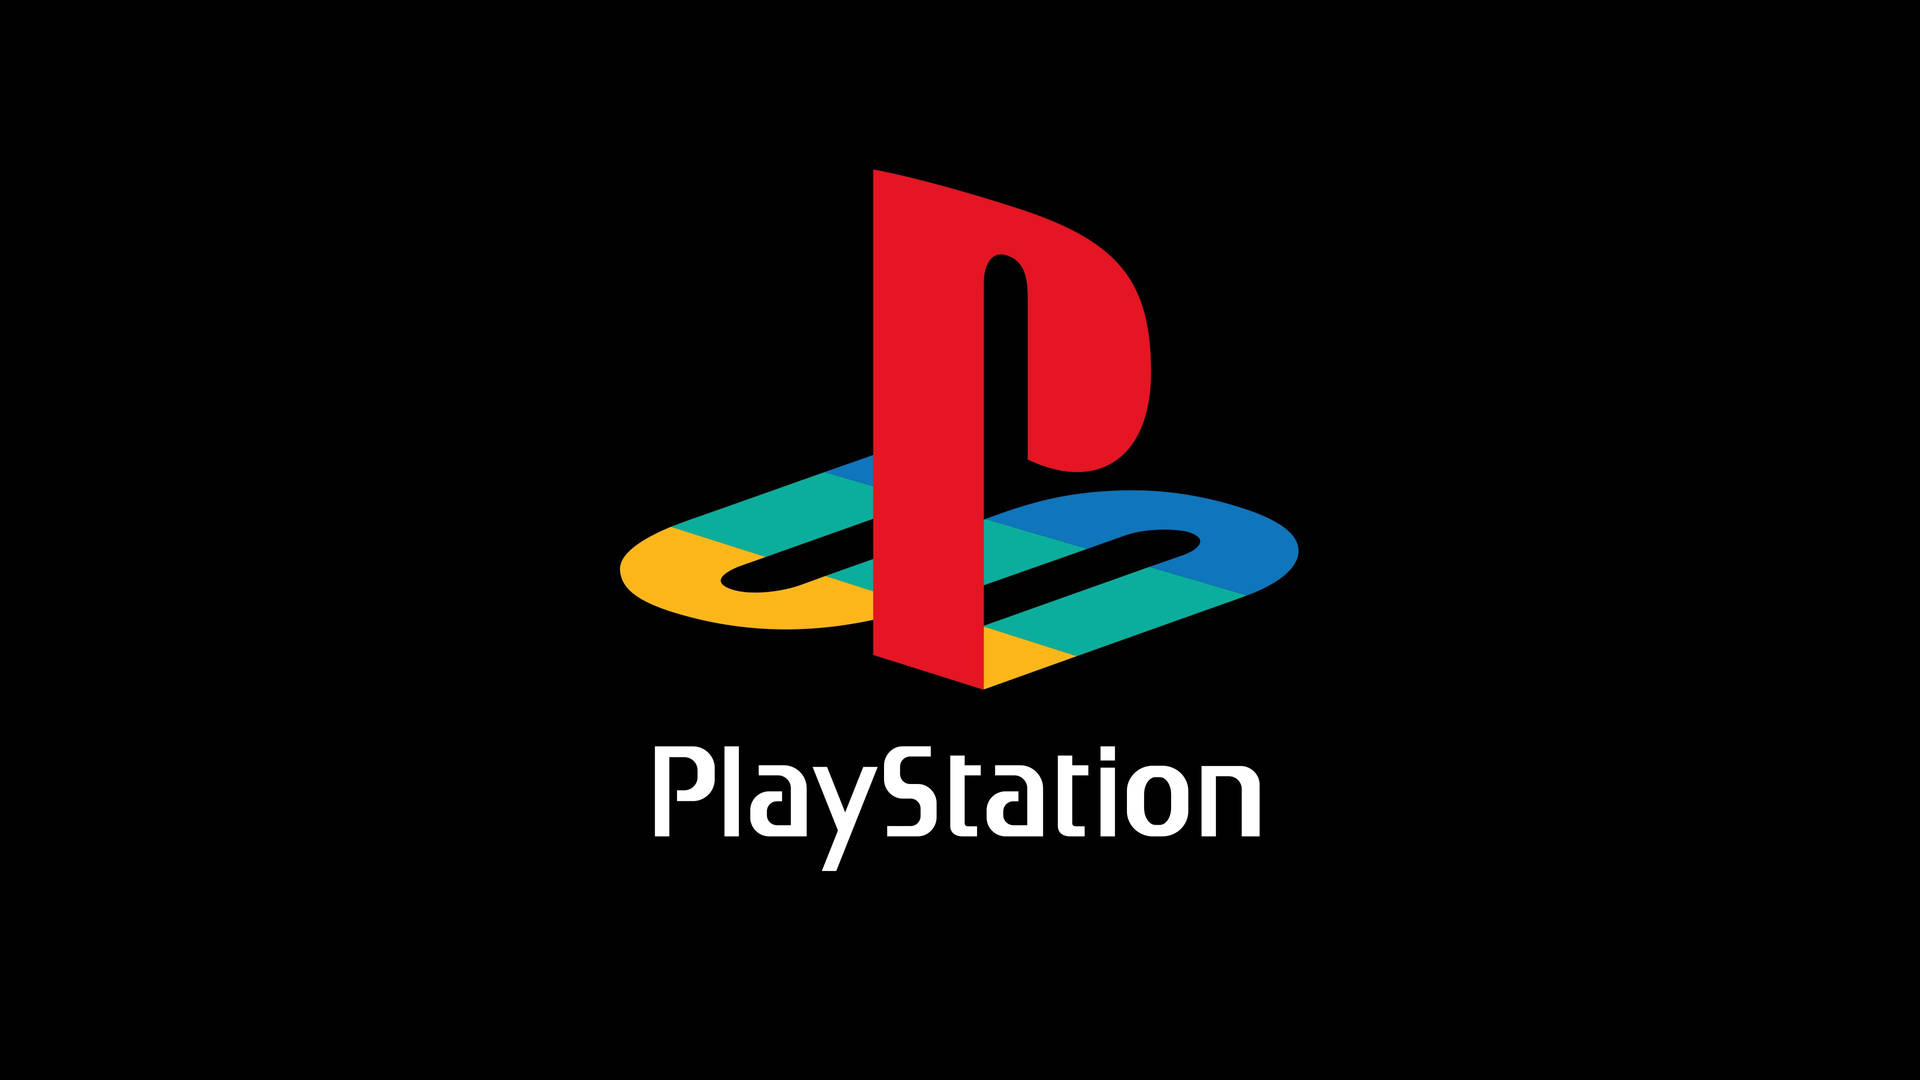 Playstation Gaming Logo Background